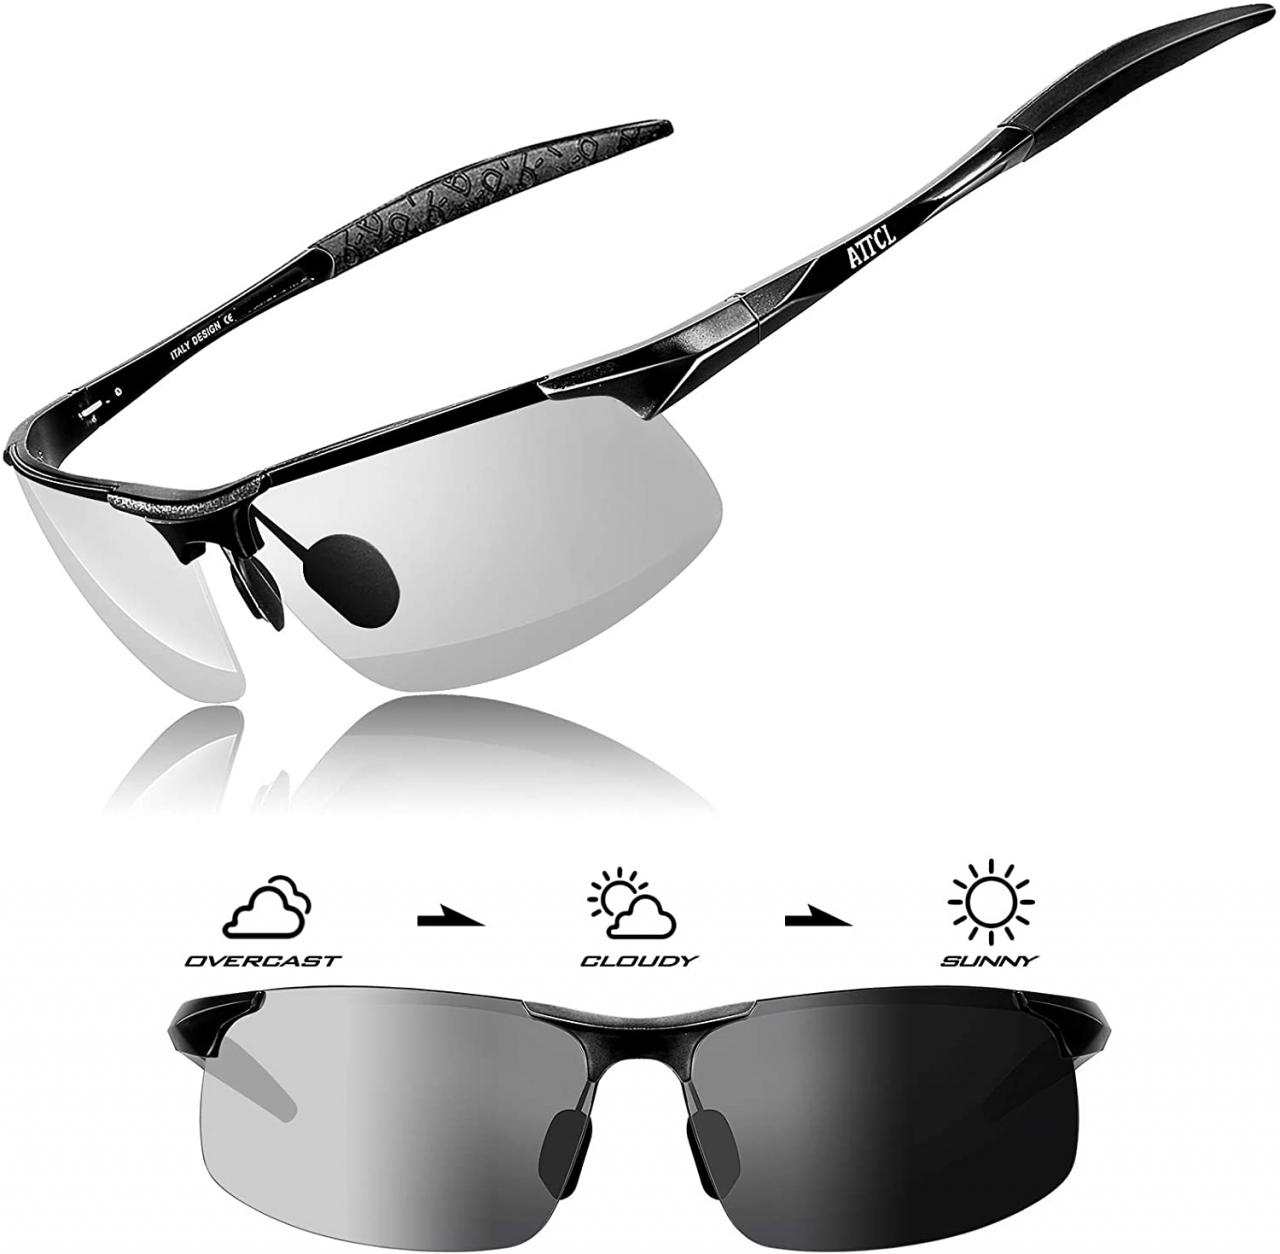 Buy ATTCL Men's Fashion Driving Polarized Sunglasses for Men - Al-Mg metal  Ultralight Frame Online in Hong Kong. B07Y8G3RFC